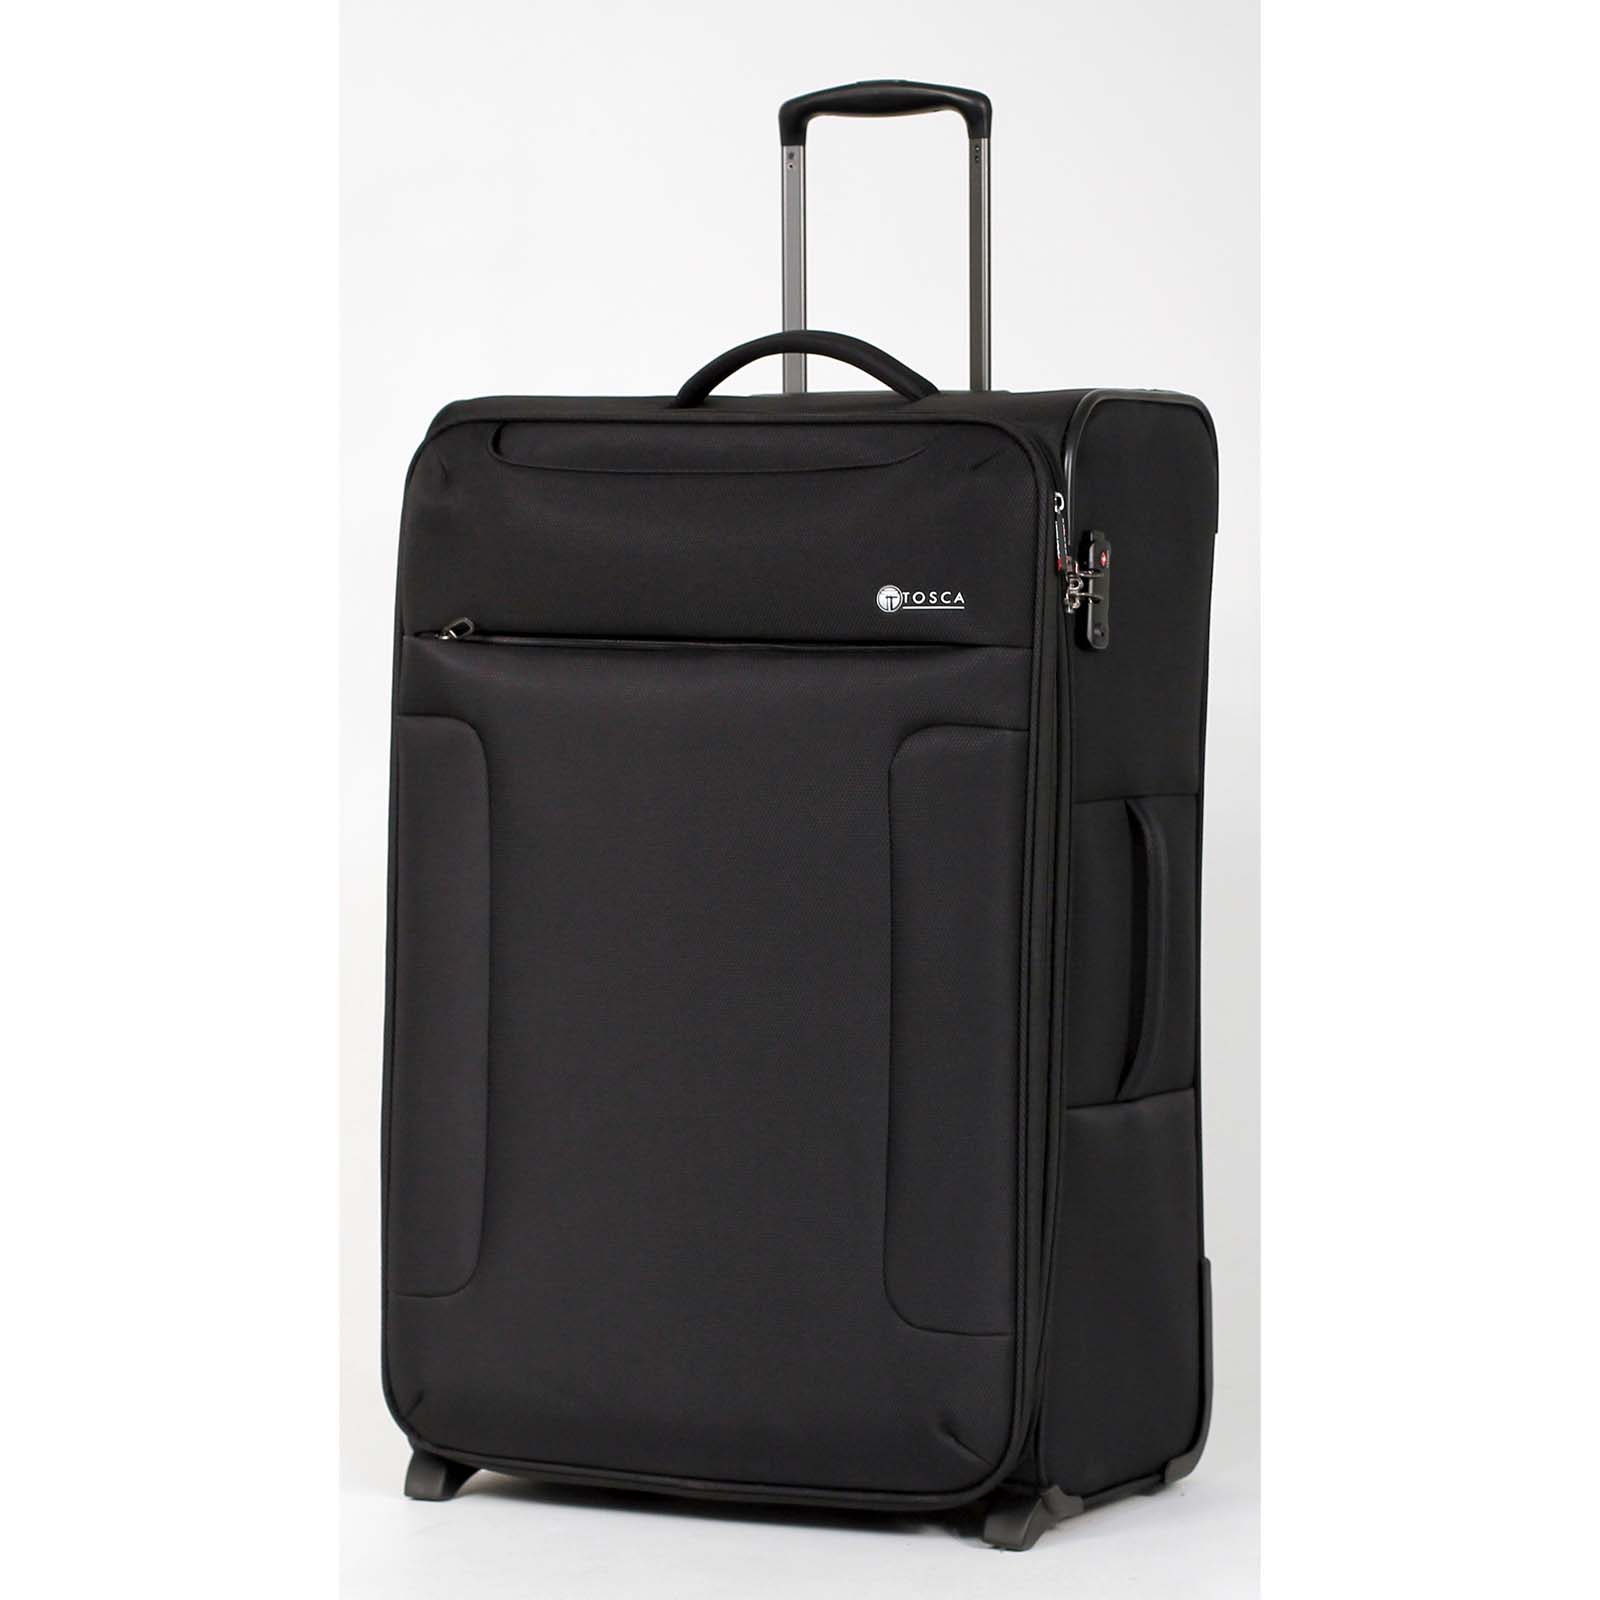 tosca-so-lite-2-wheel-large-suitcase-black-front